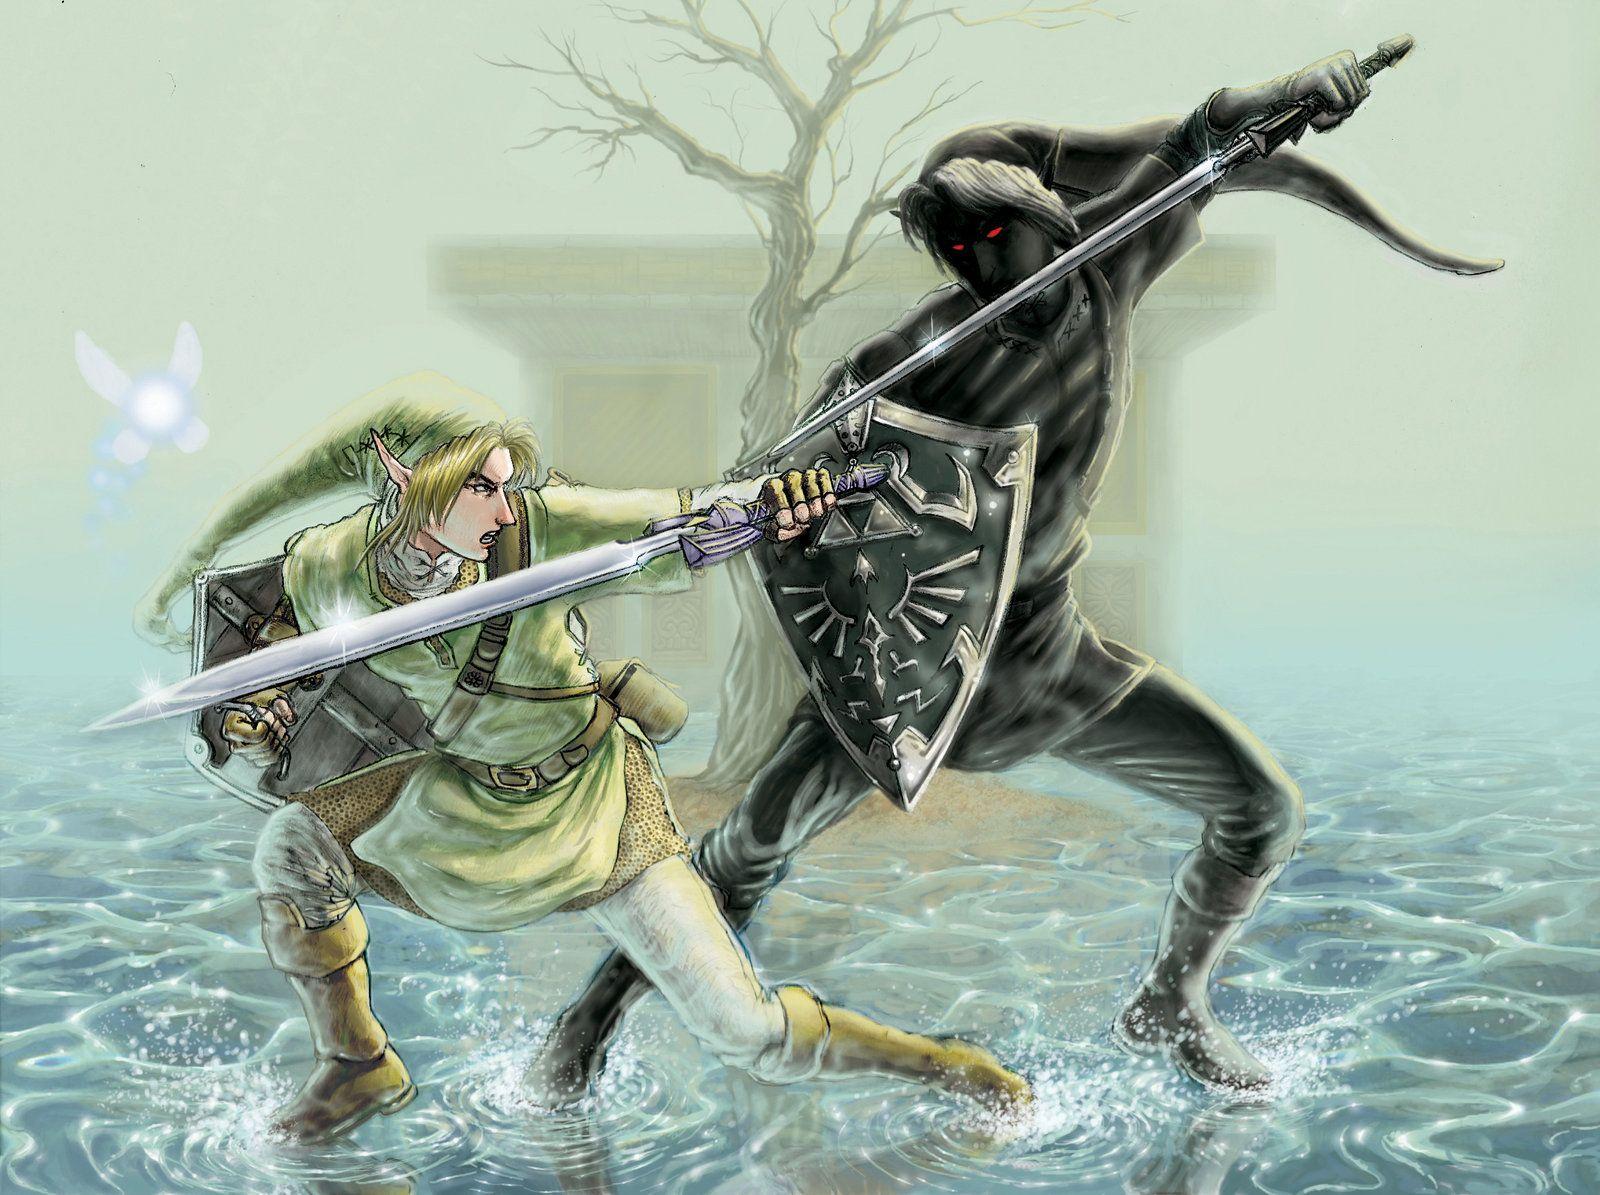 Link vs. Dark Link Legend of Zelda. Link